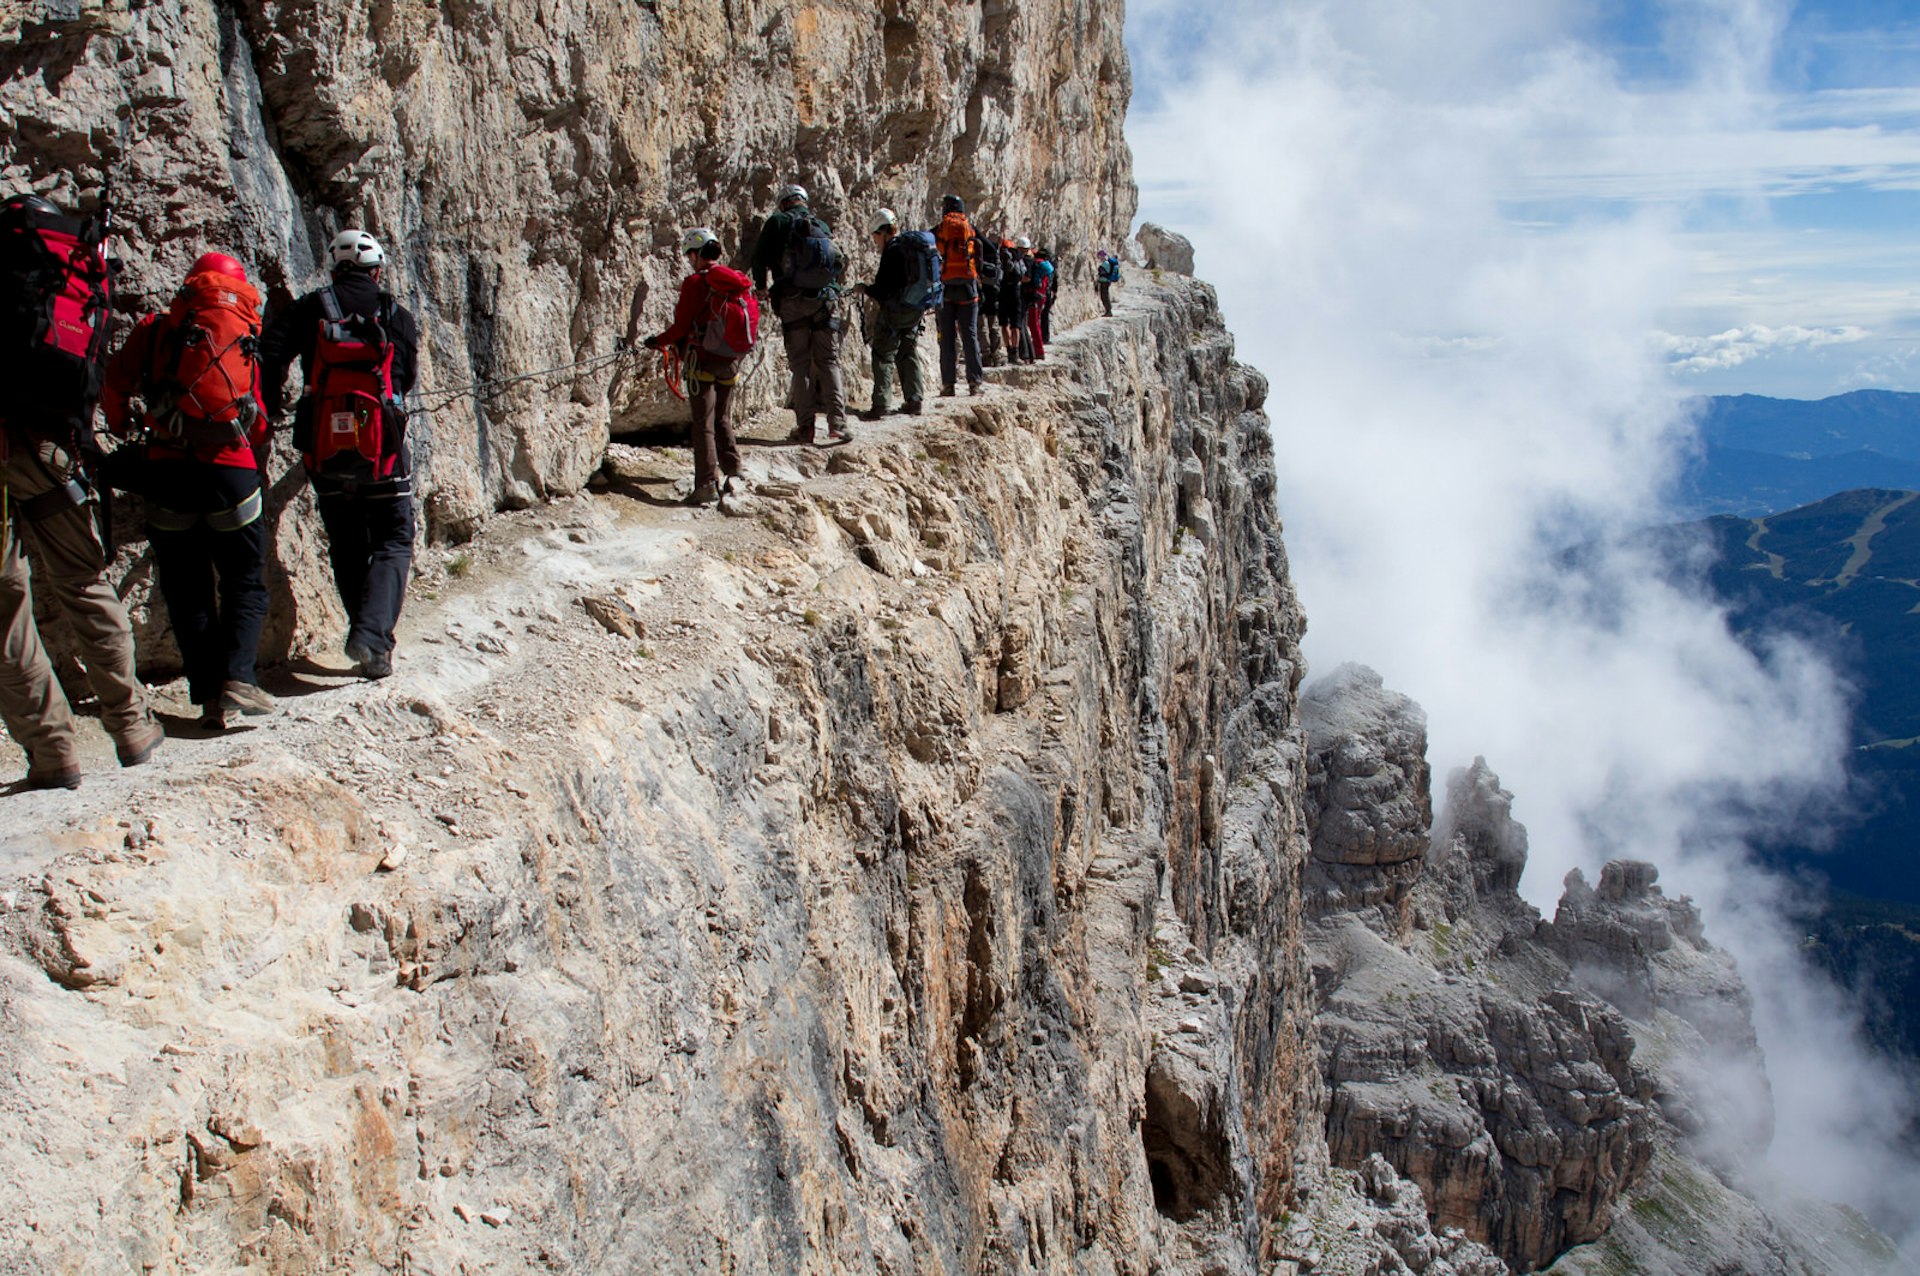 A group of climbers on a via ferrara edge their way past a precipitous drop